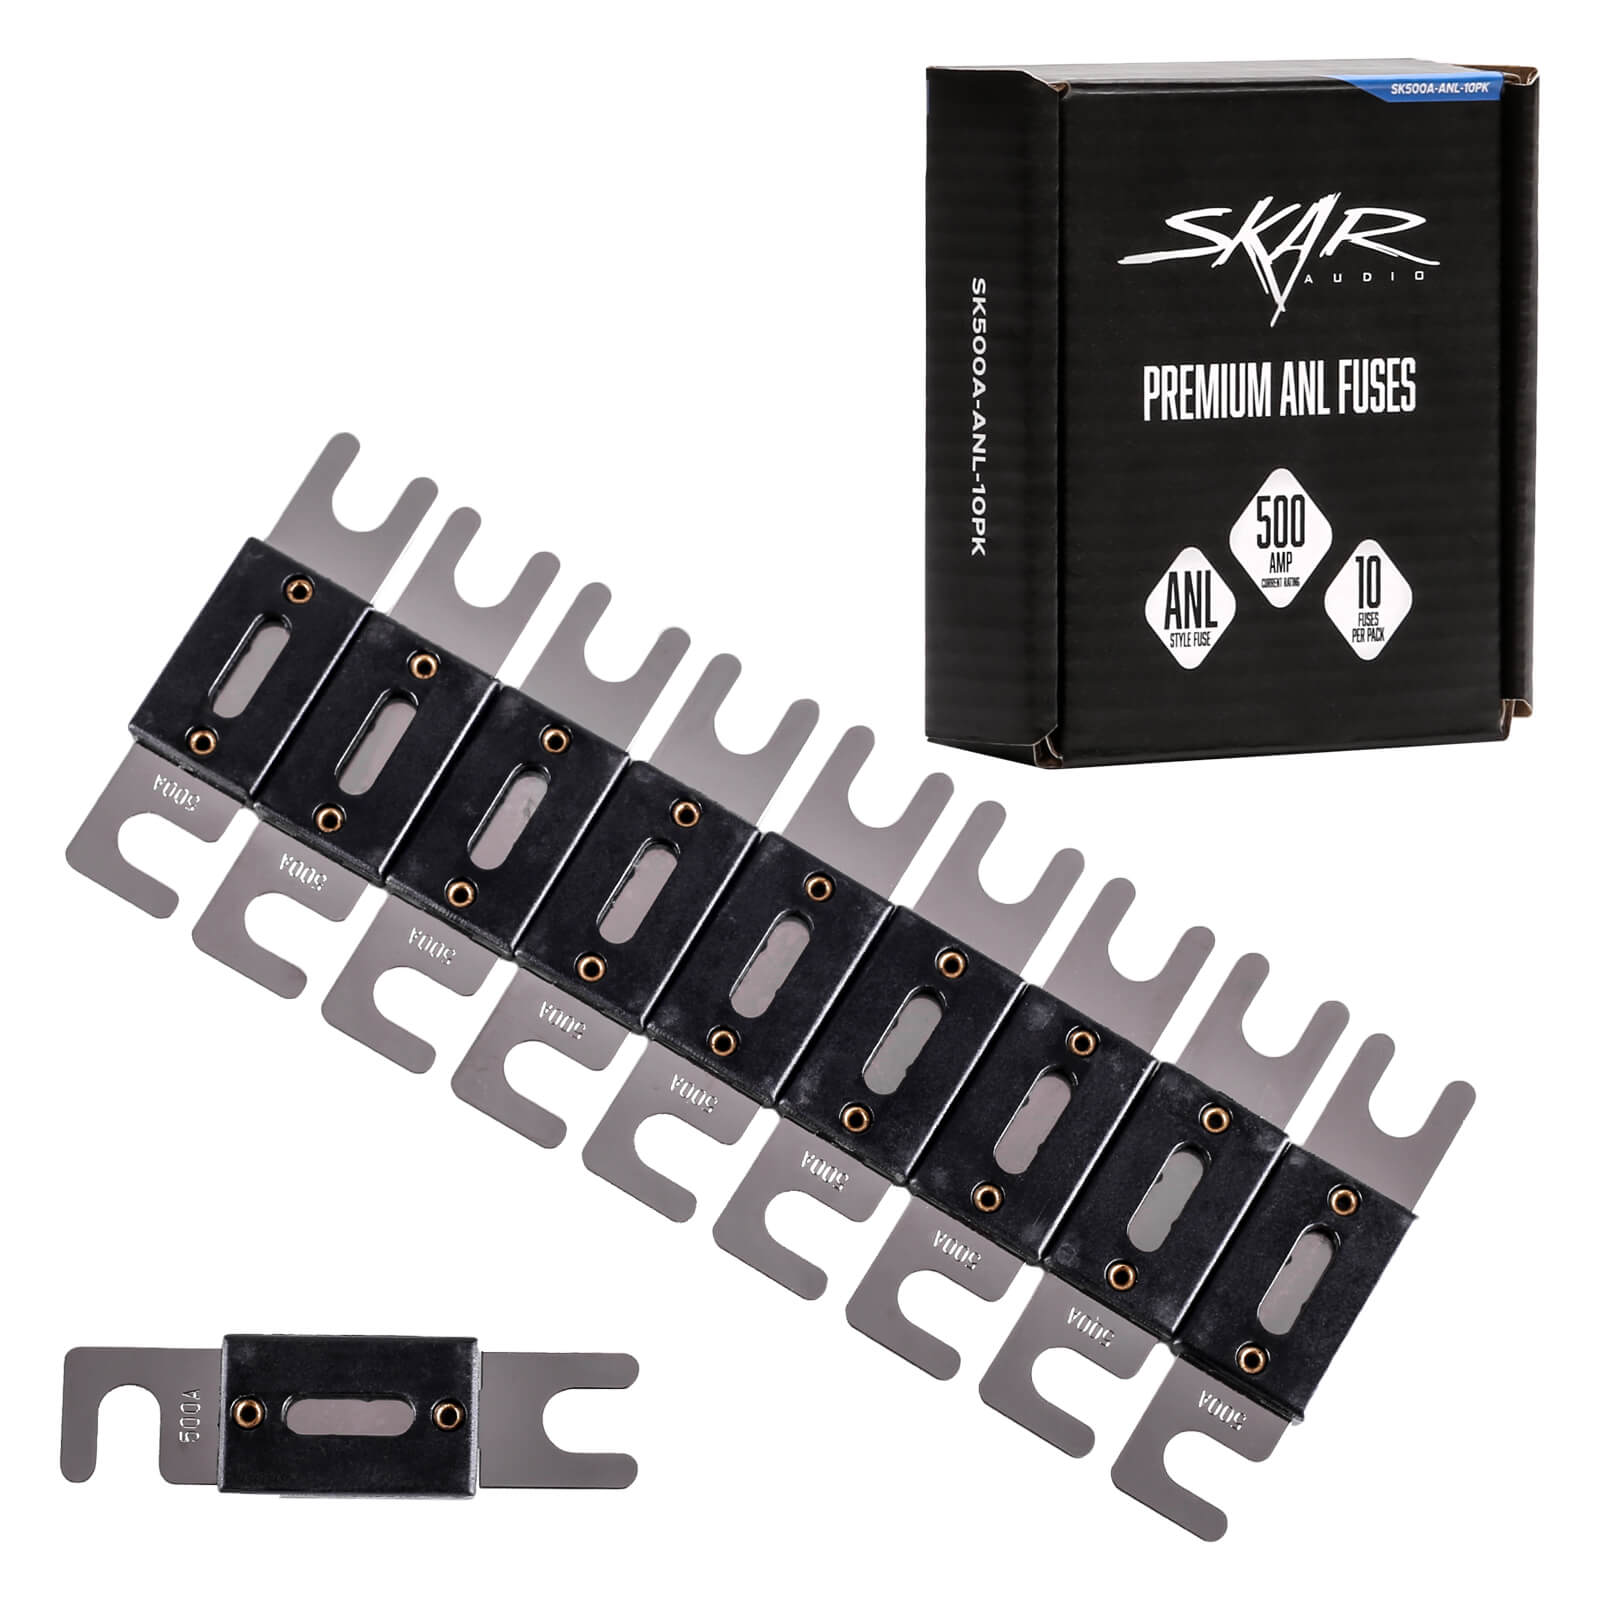 Skar Audio 500 Amp ANL Fuses (10-Pack) - SK500A-ANL-10PK - Main Image